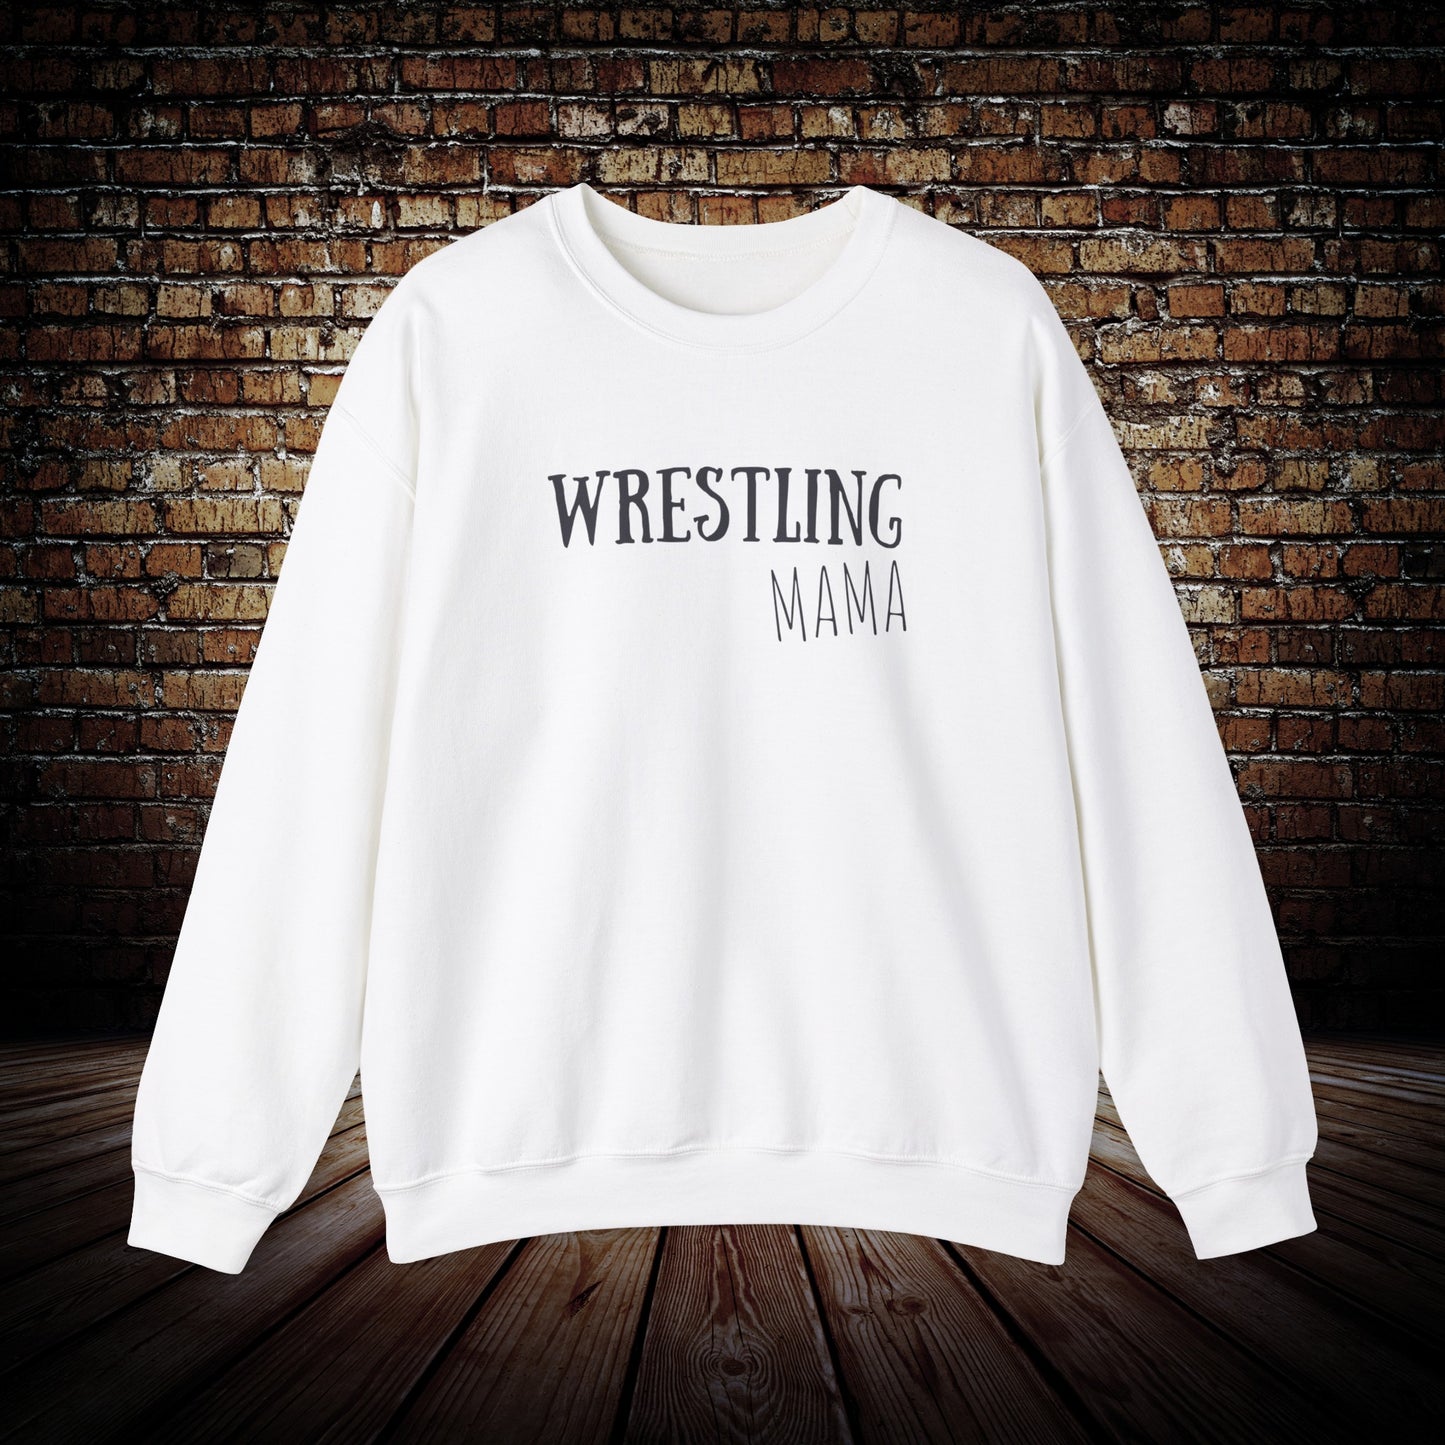 Wrestling mama sweatshirt